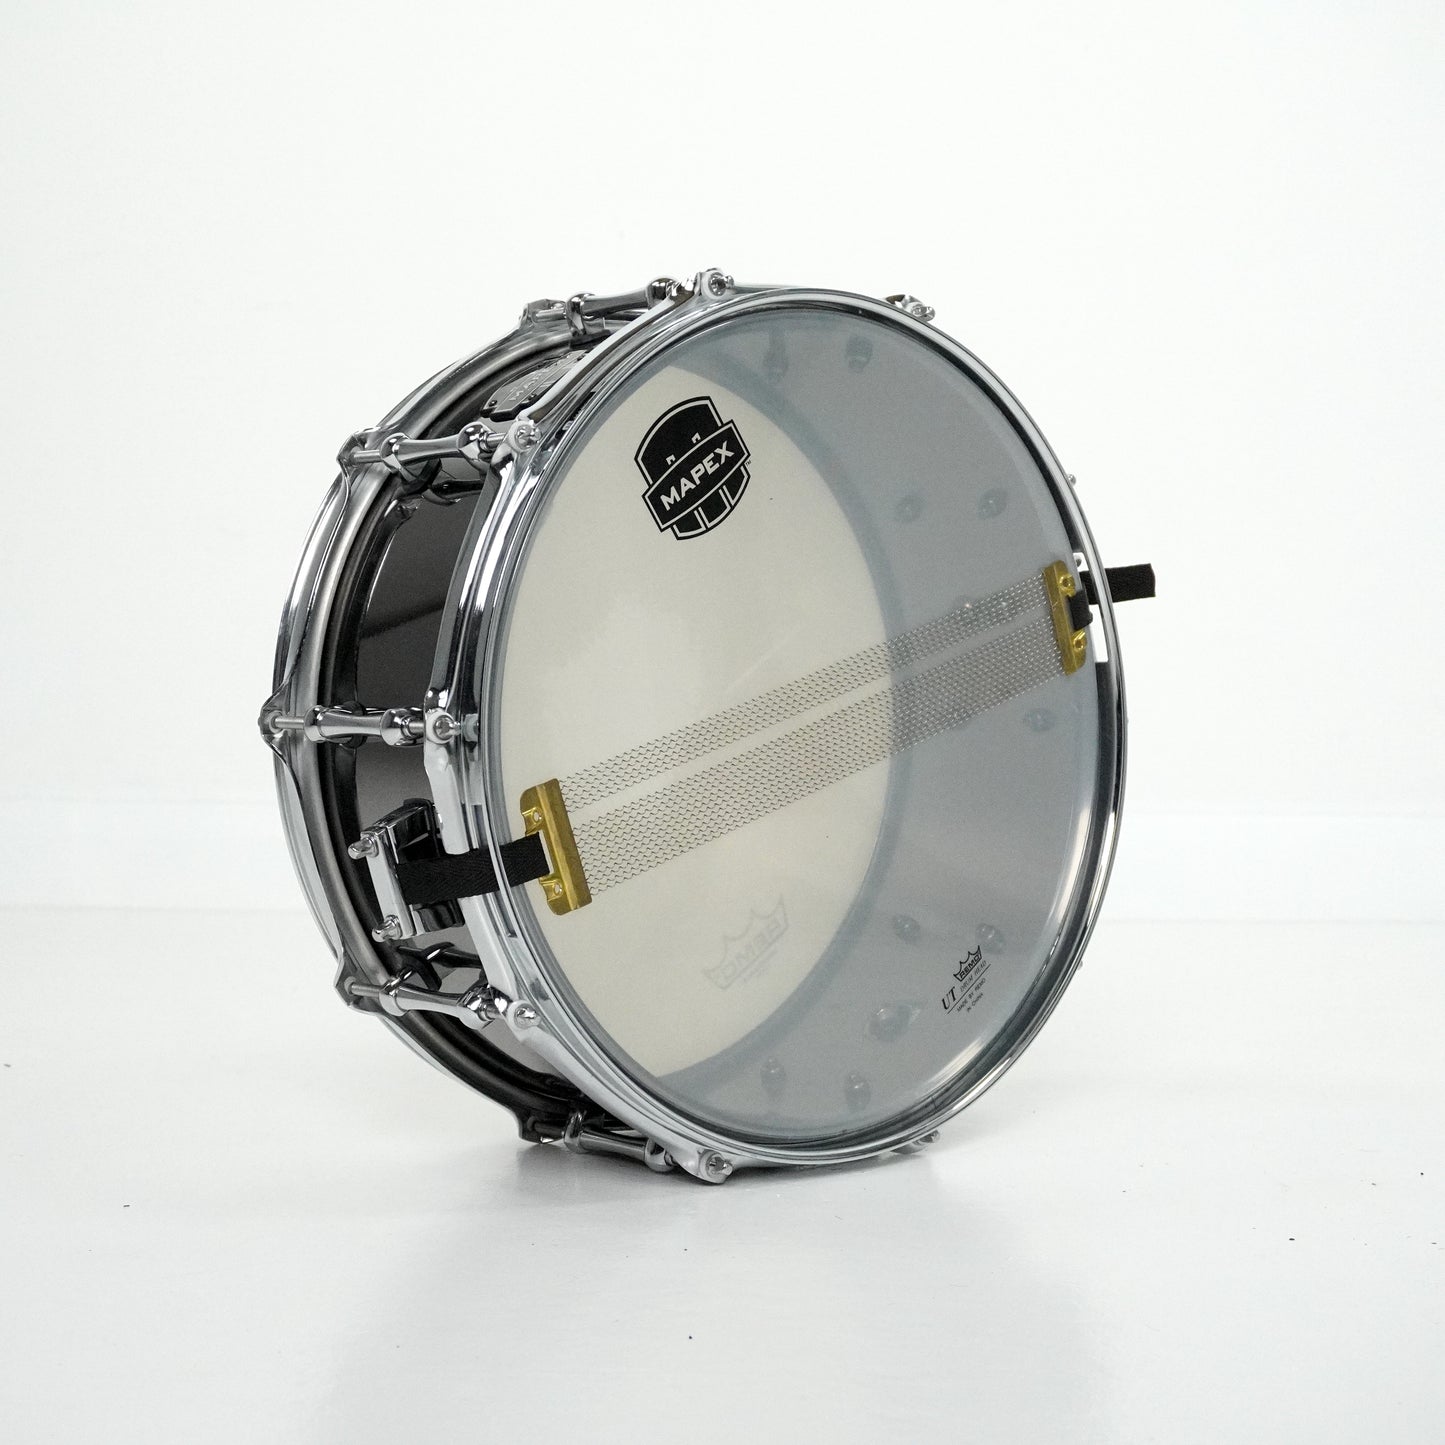 Mapex 14” x 5.5” Tomahawk Snare Drum